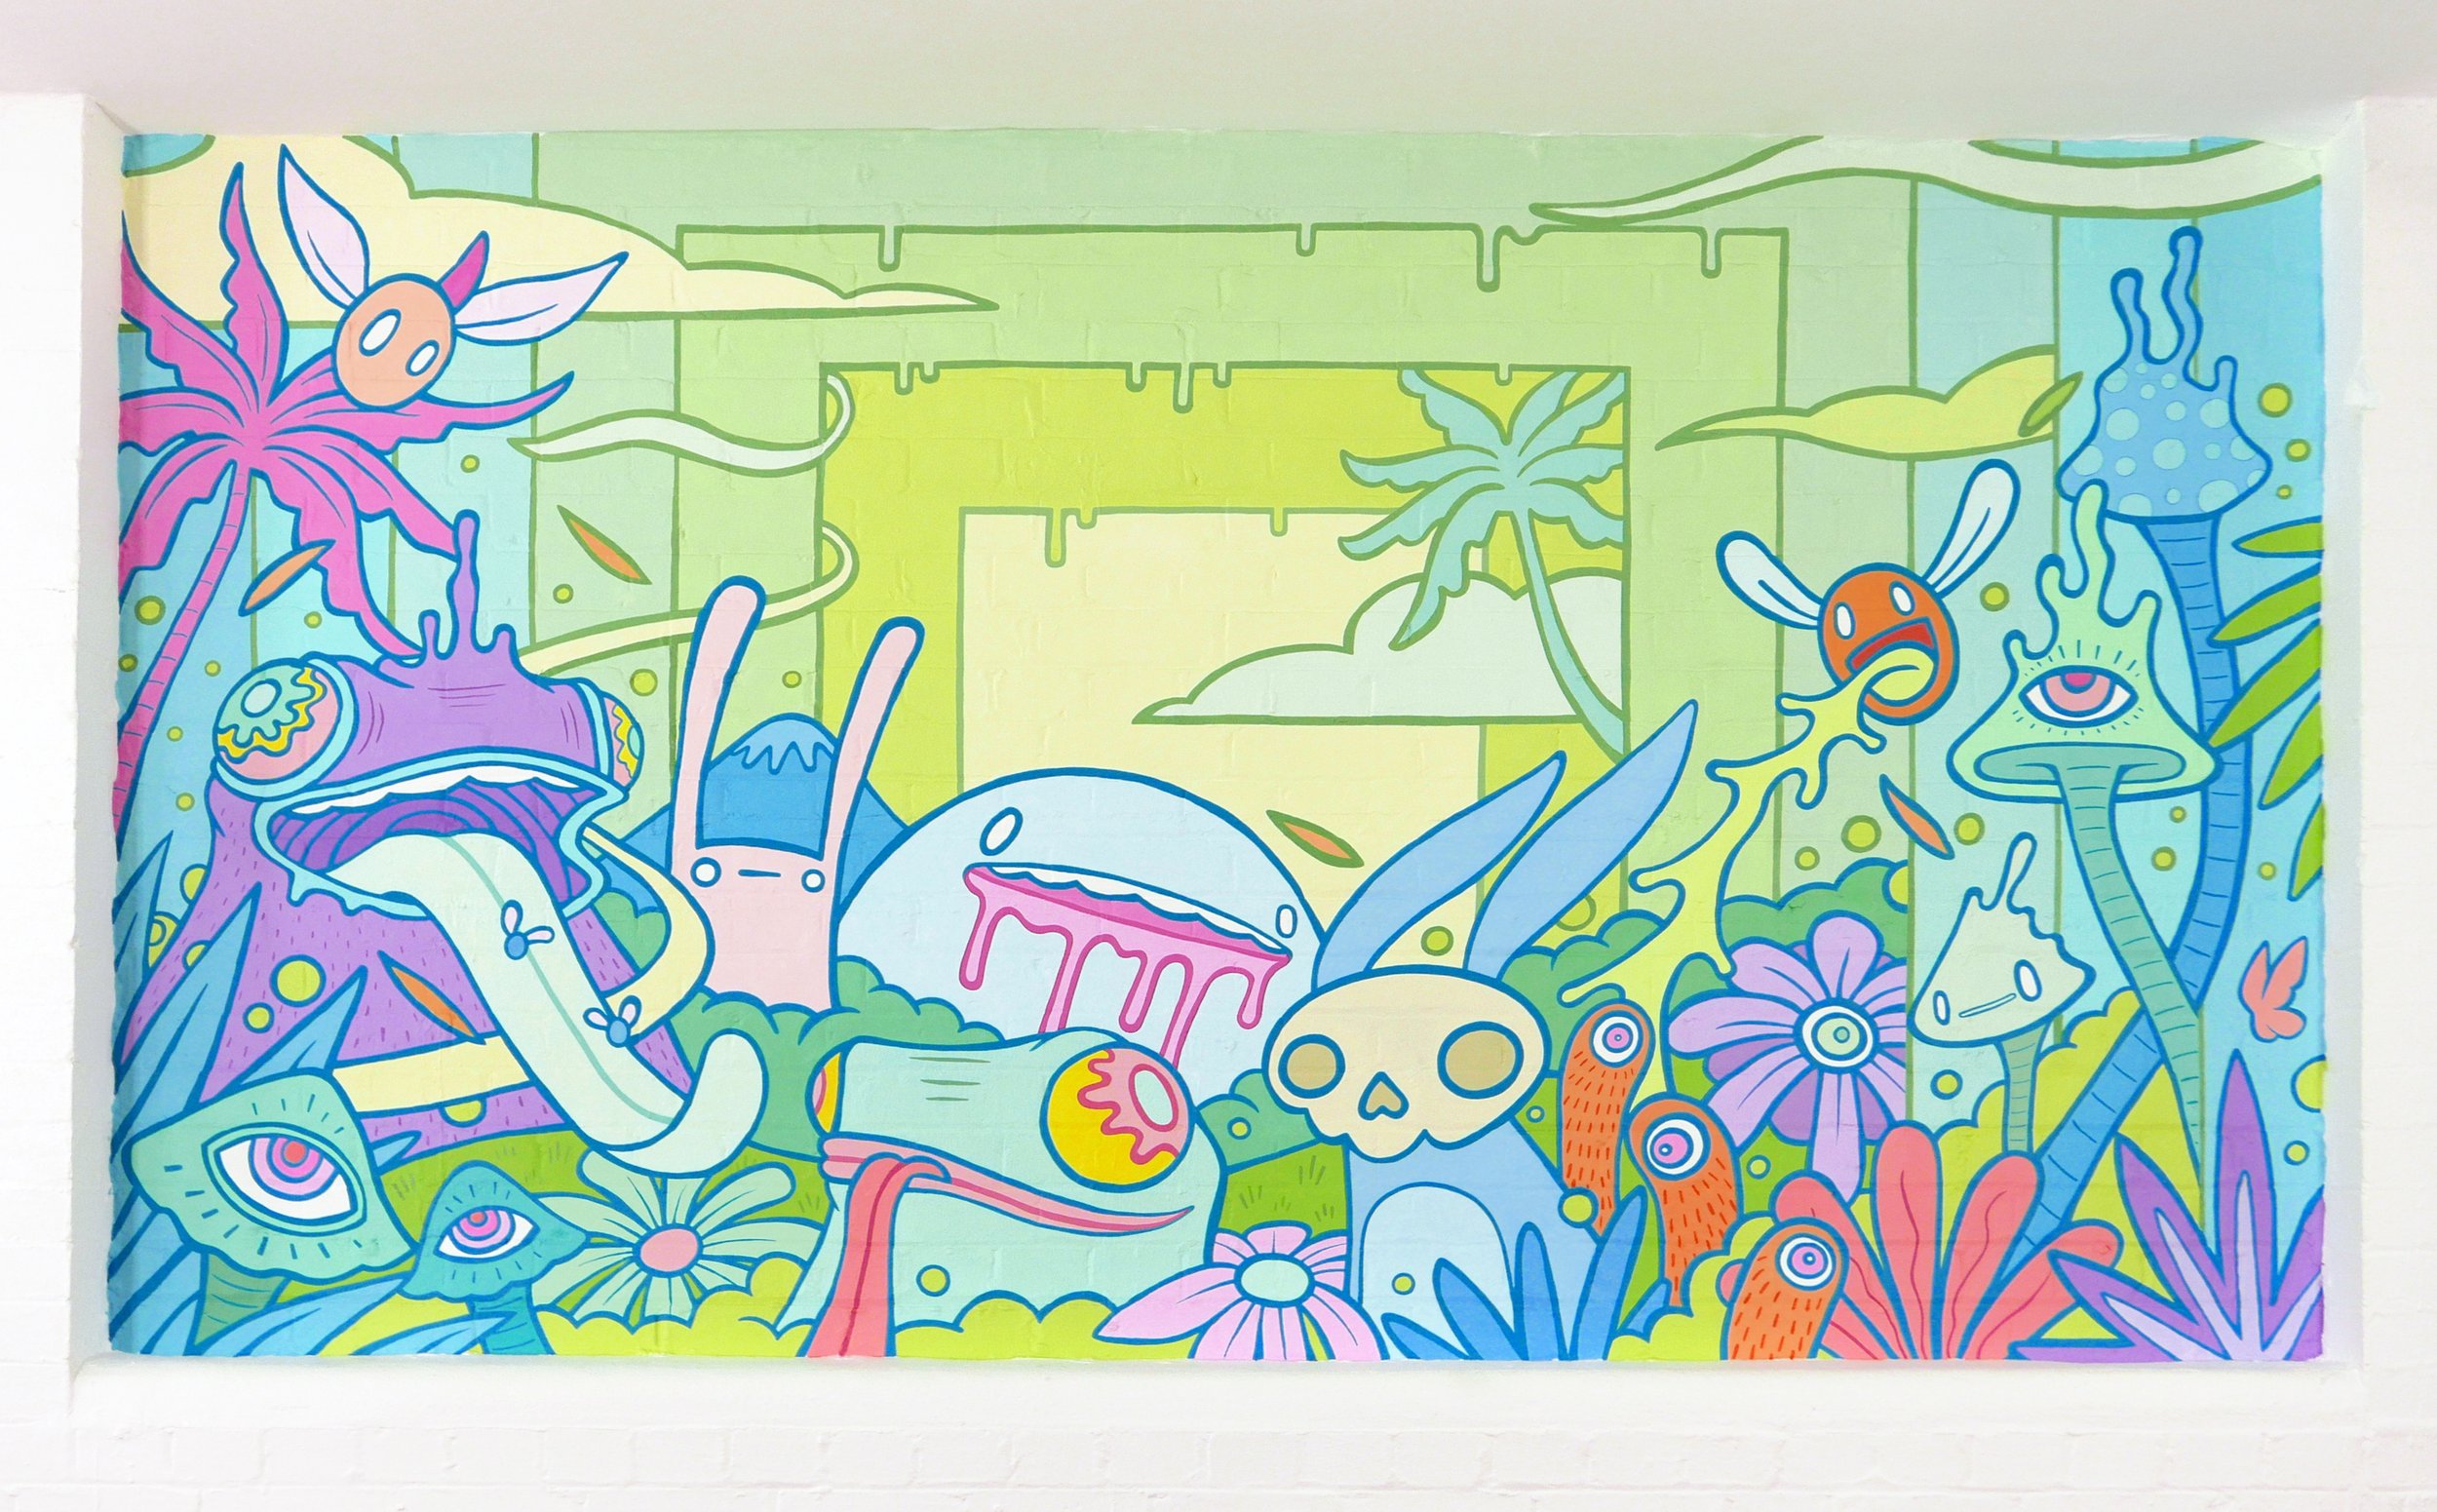 Arcade Ltd mural commission 2